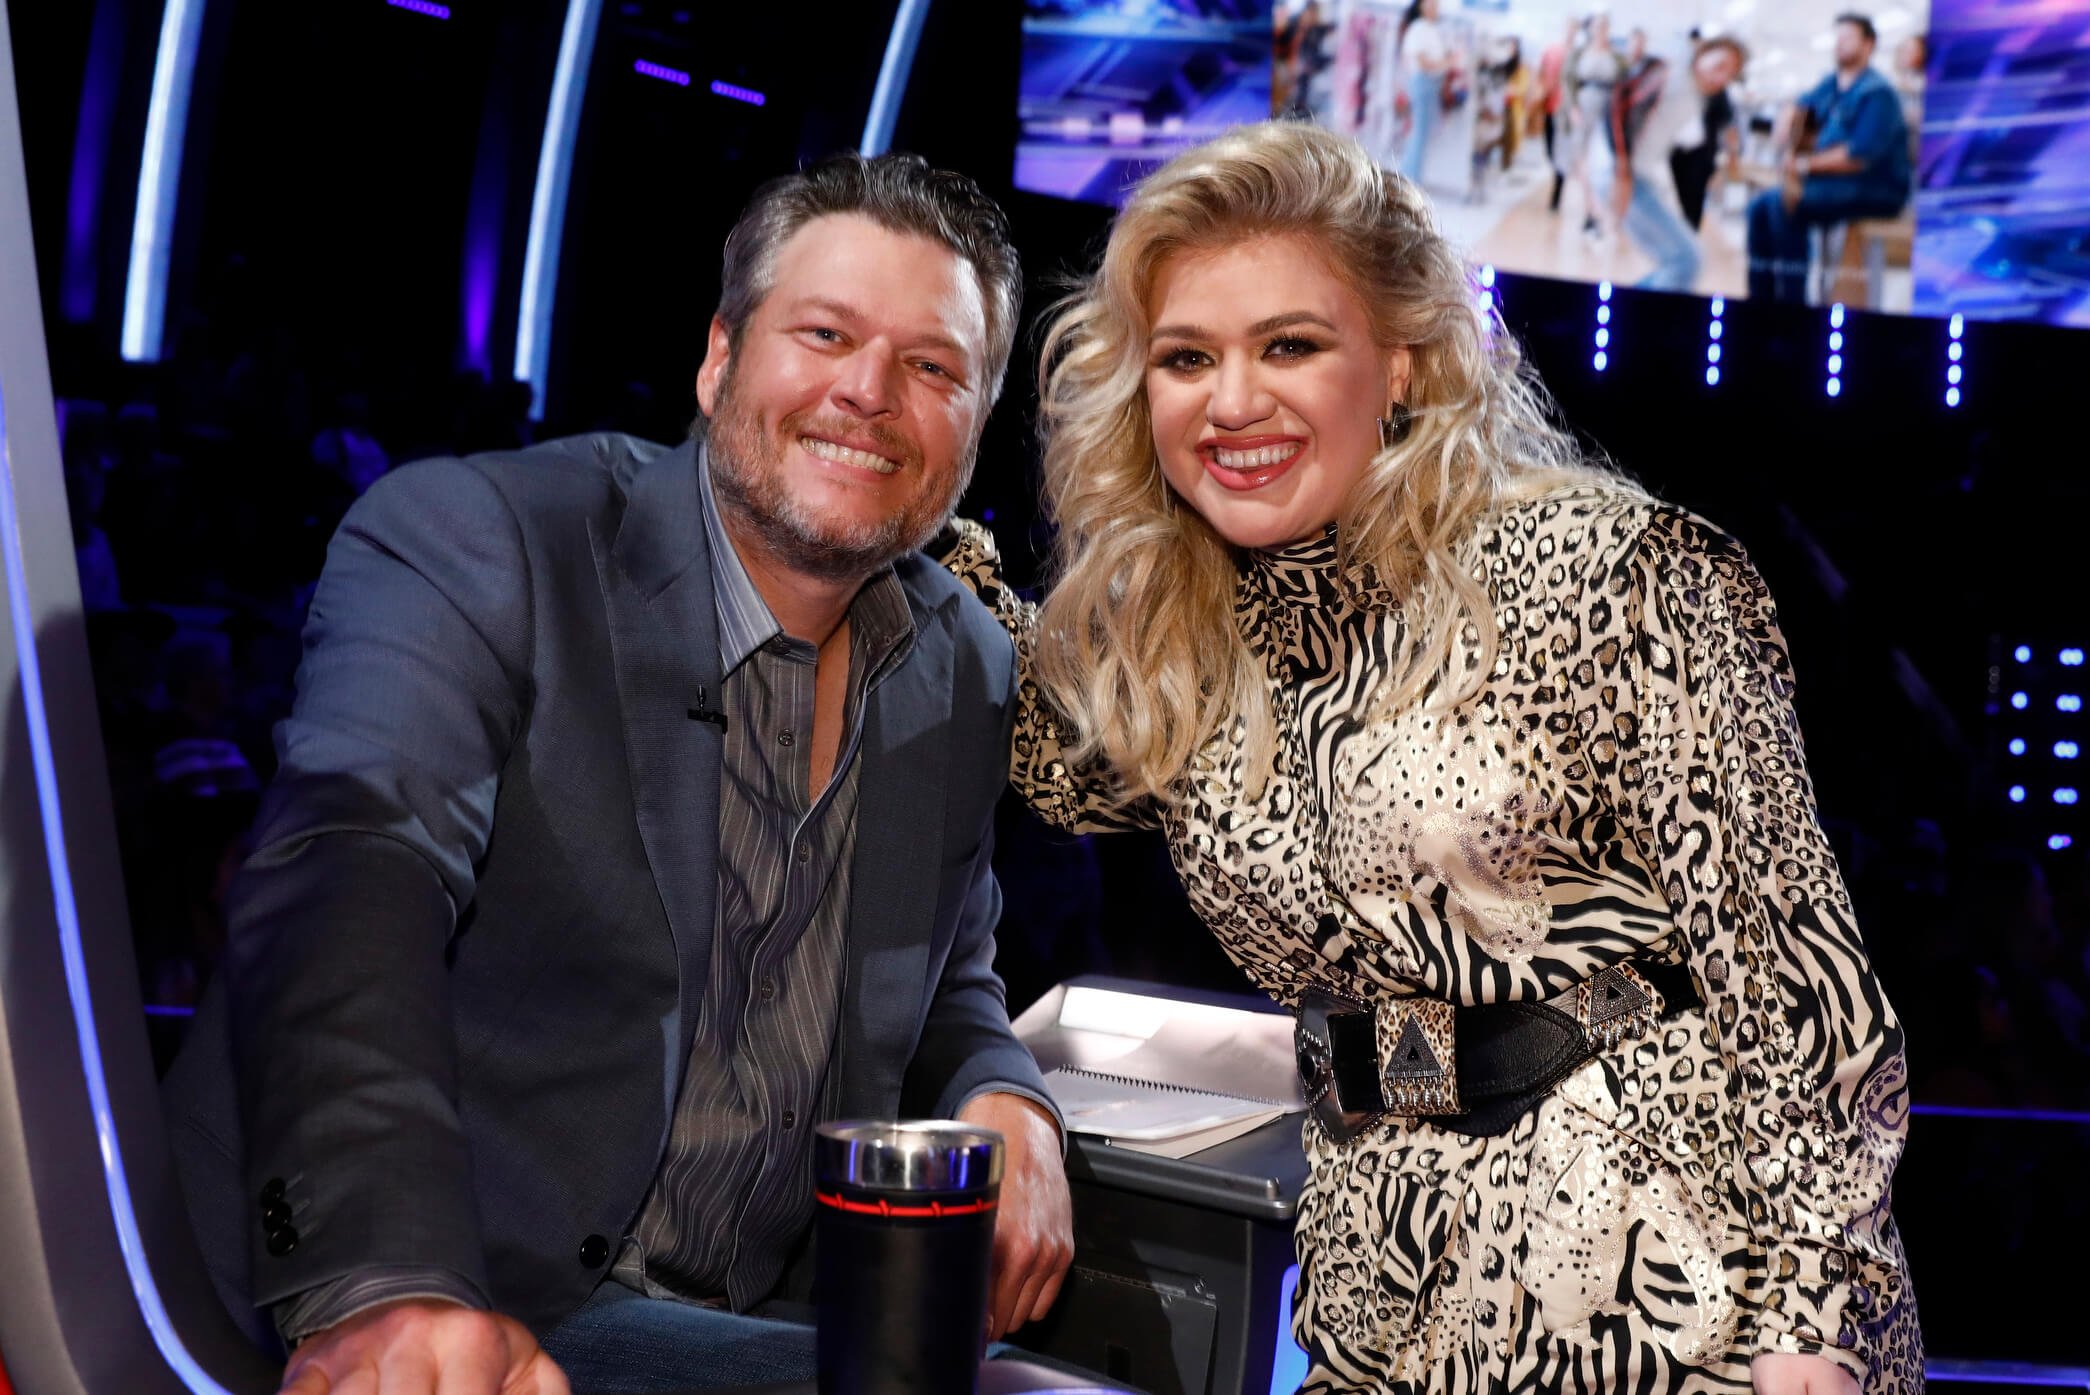 'Barmageddon' Season 2 creator Blake Shelton and Kelly Clarkson smiling on 'The Voice'